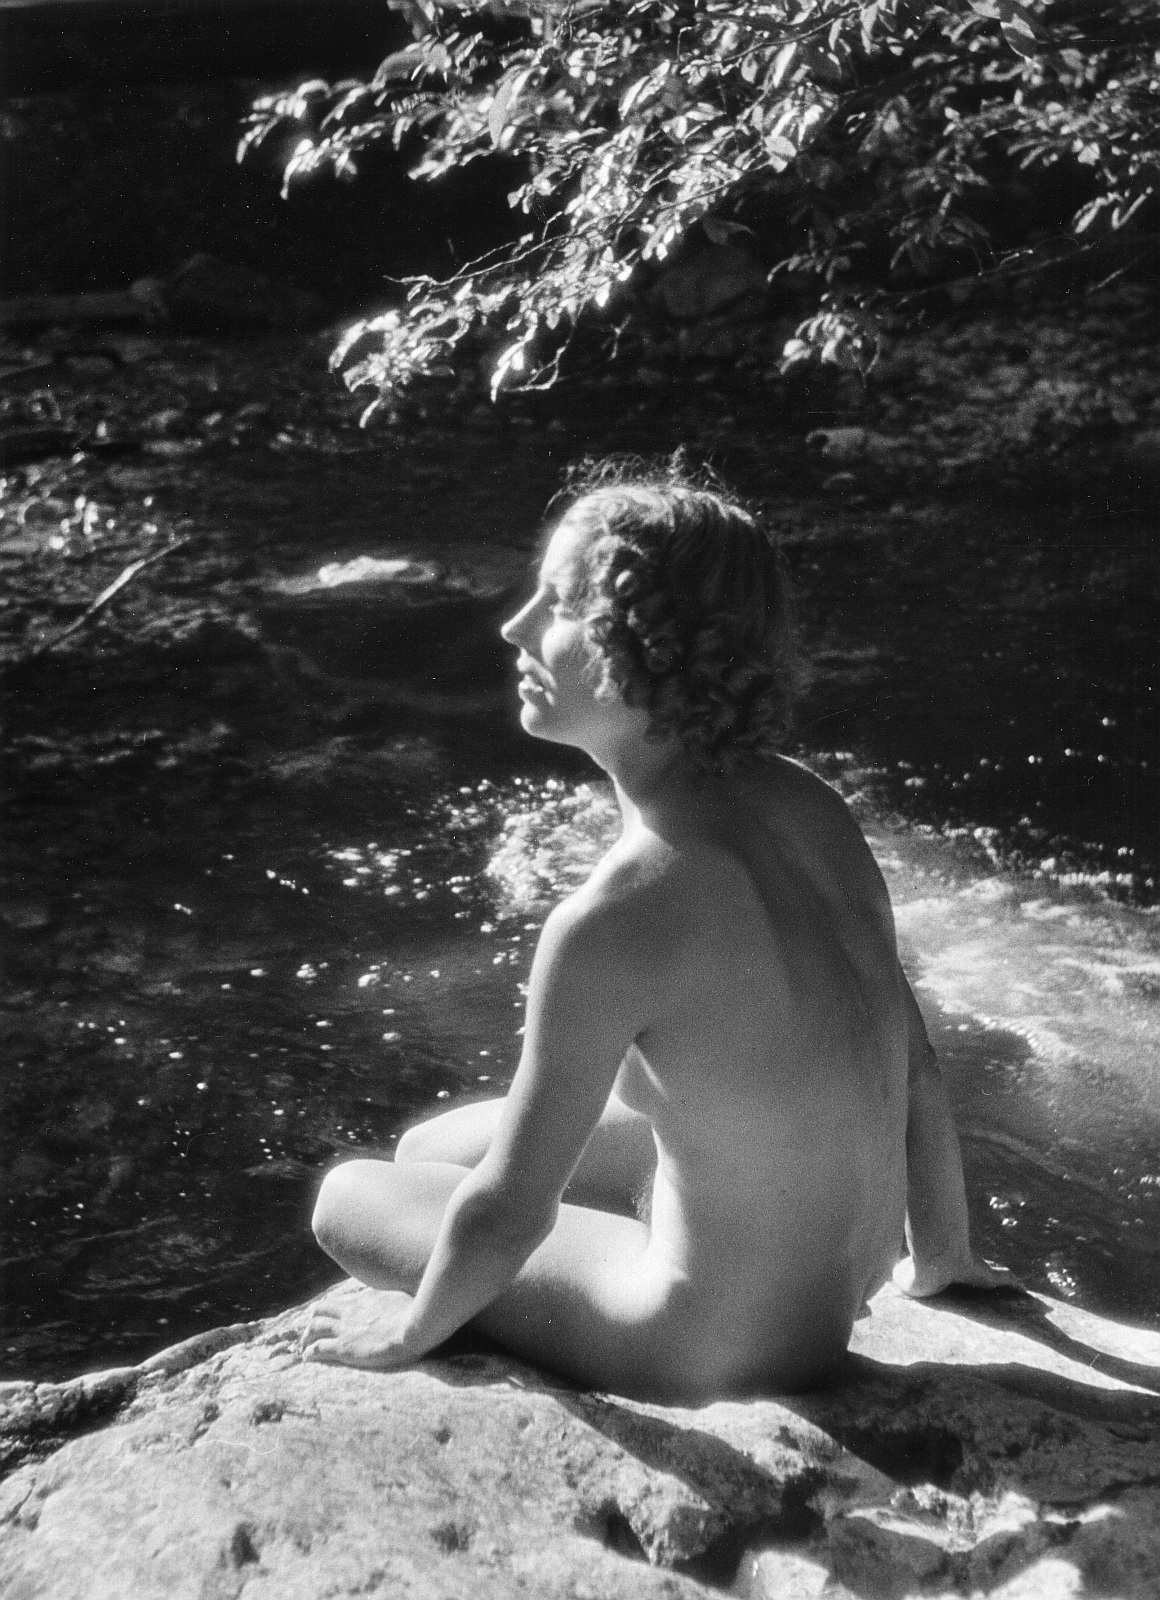 Lala Aufsberg :: Nude studies. A nude young woman sitting by a mountain stream, 1939. | Deutsche Fotothek